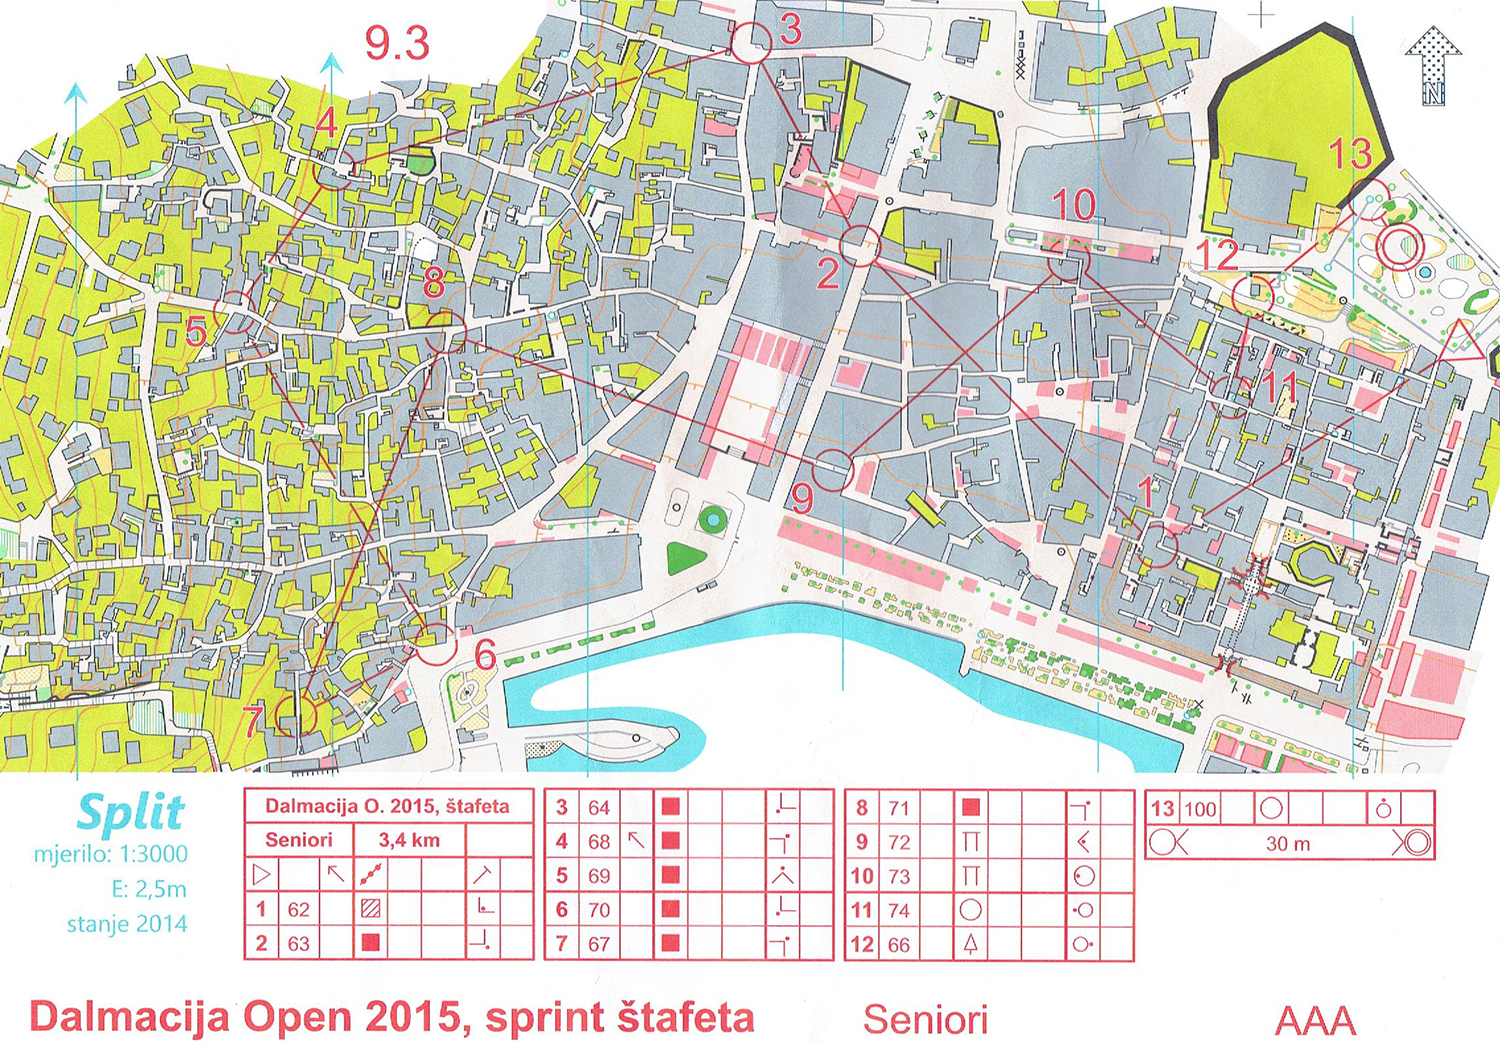 Dalmacija open - mixed sprint relay (10.10.2015)